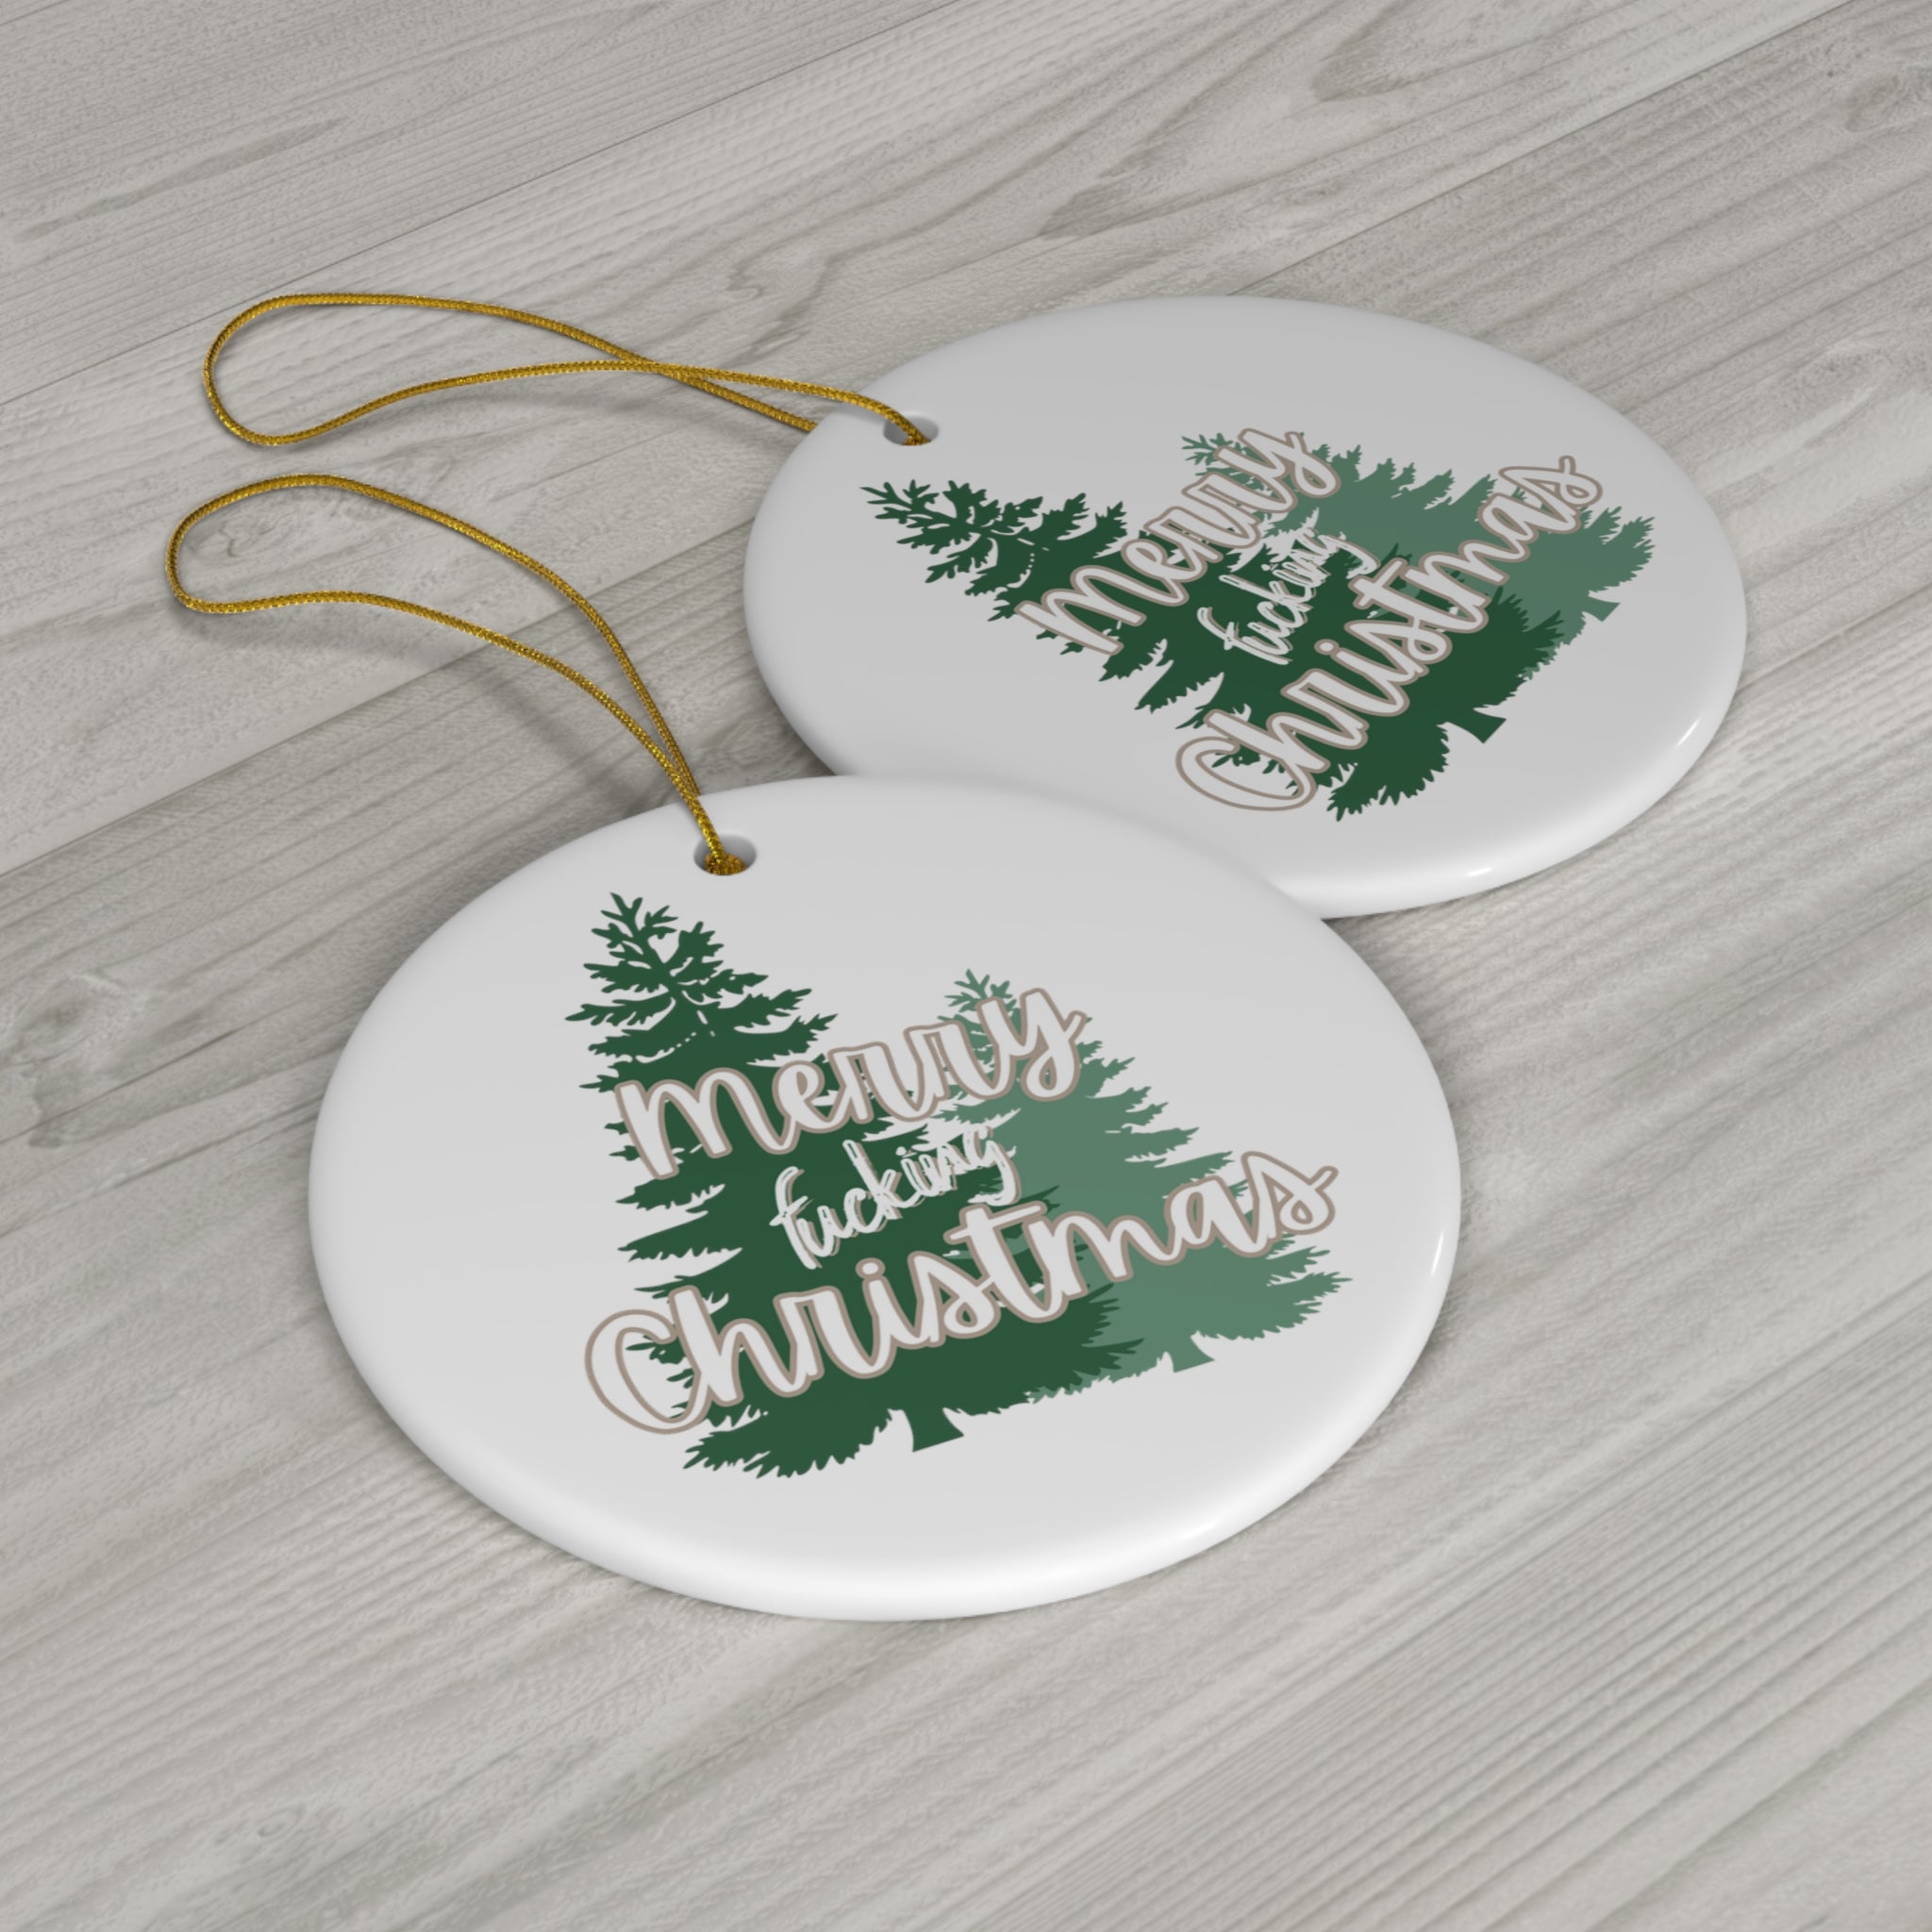  Merry Fucking Christmas (Green Trees) Ceramic Ornament, Sweary Christmas Ornament, Funny Porcelain Decoration, Holiday Decor Home Decor